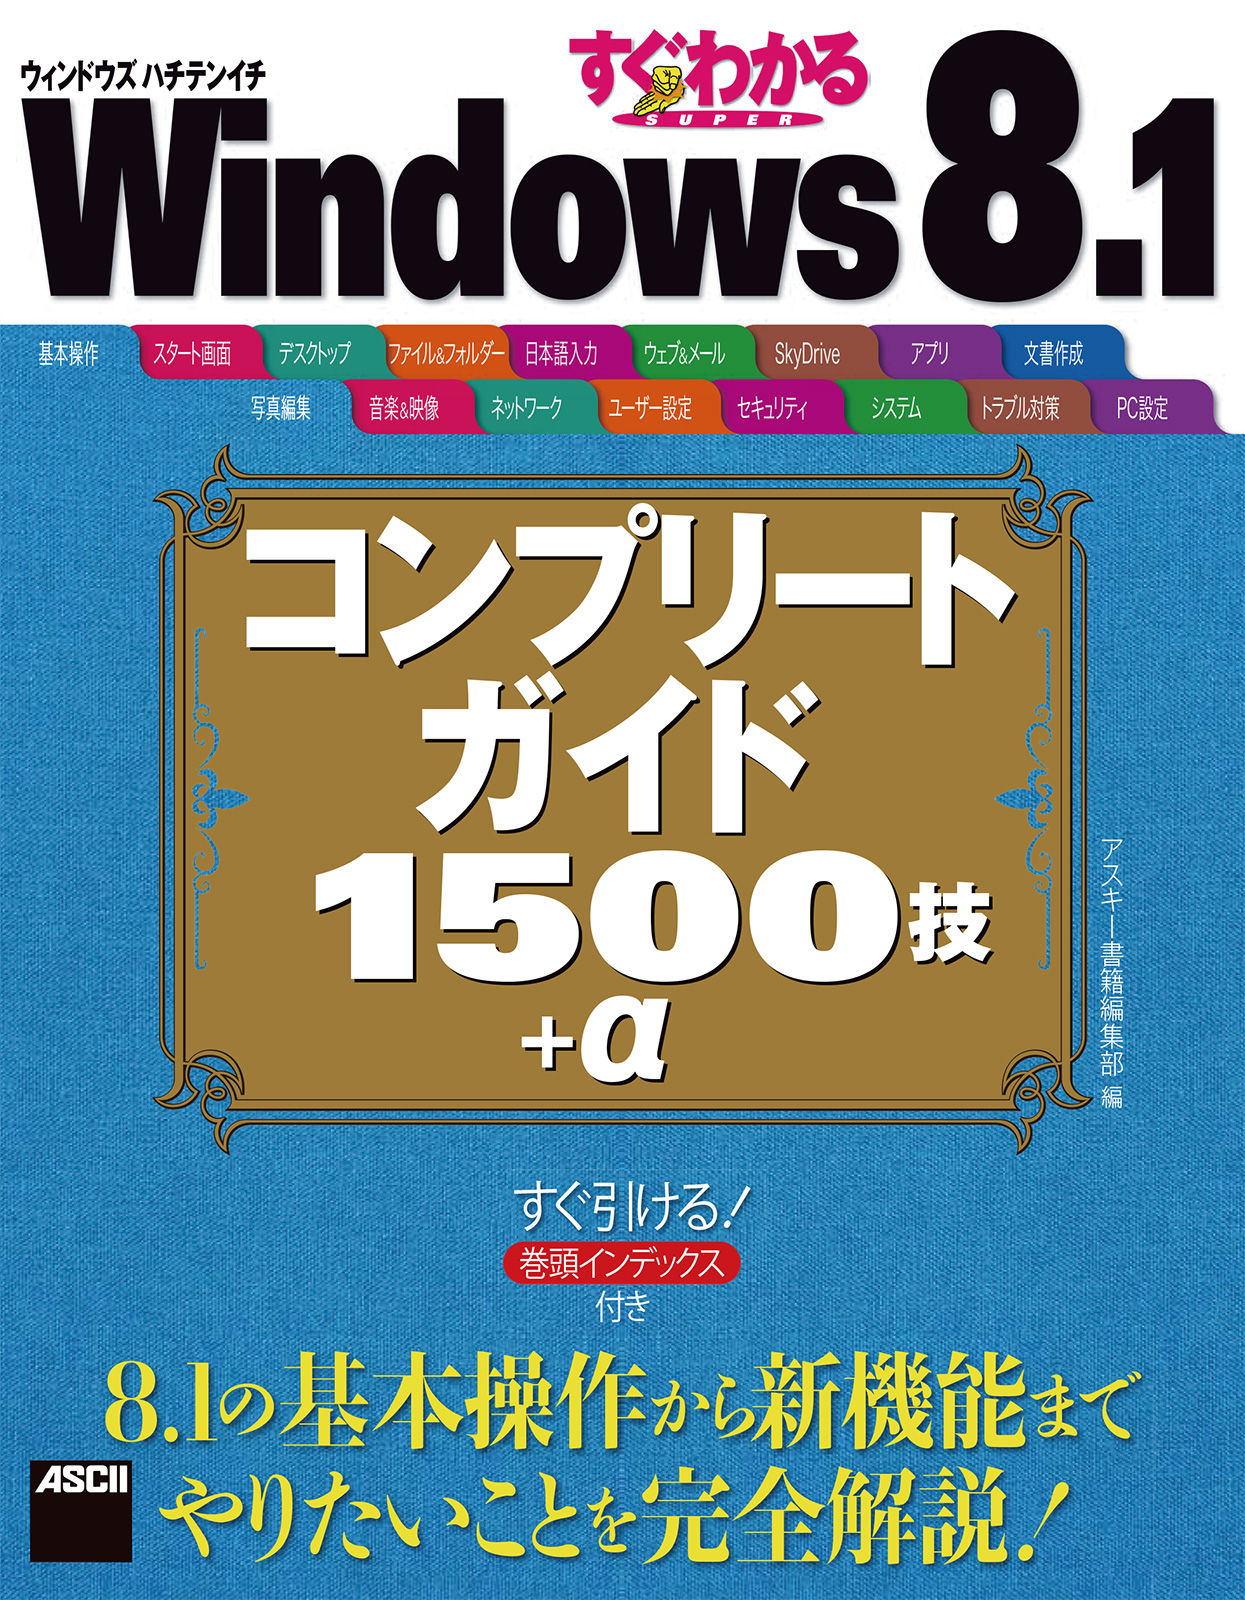 Free Epub Reader For Windows 8 Pc